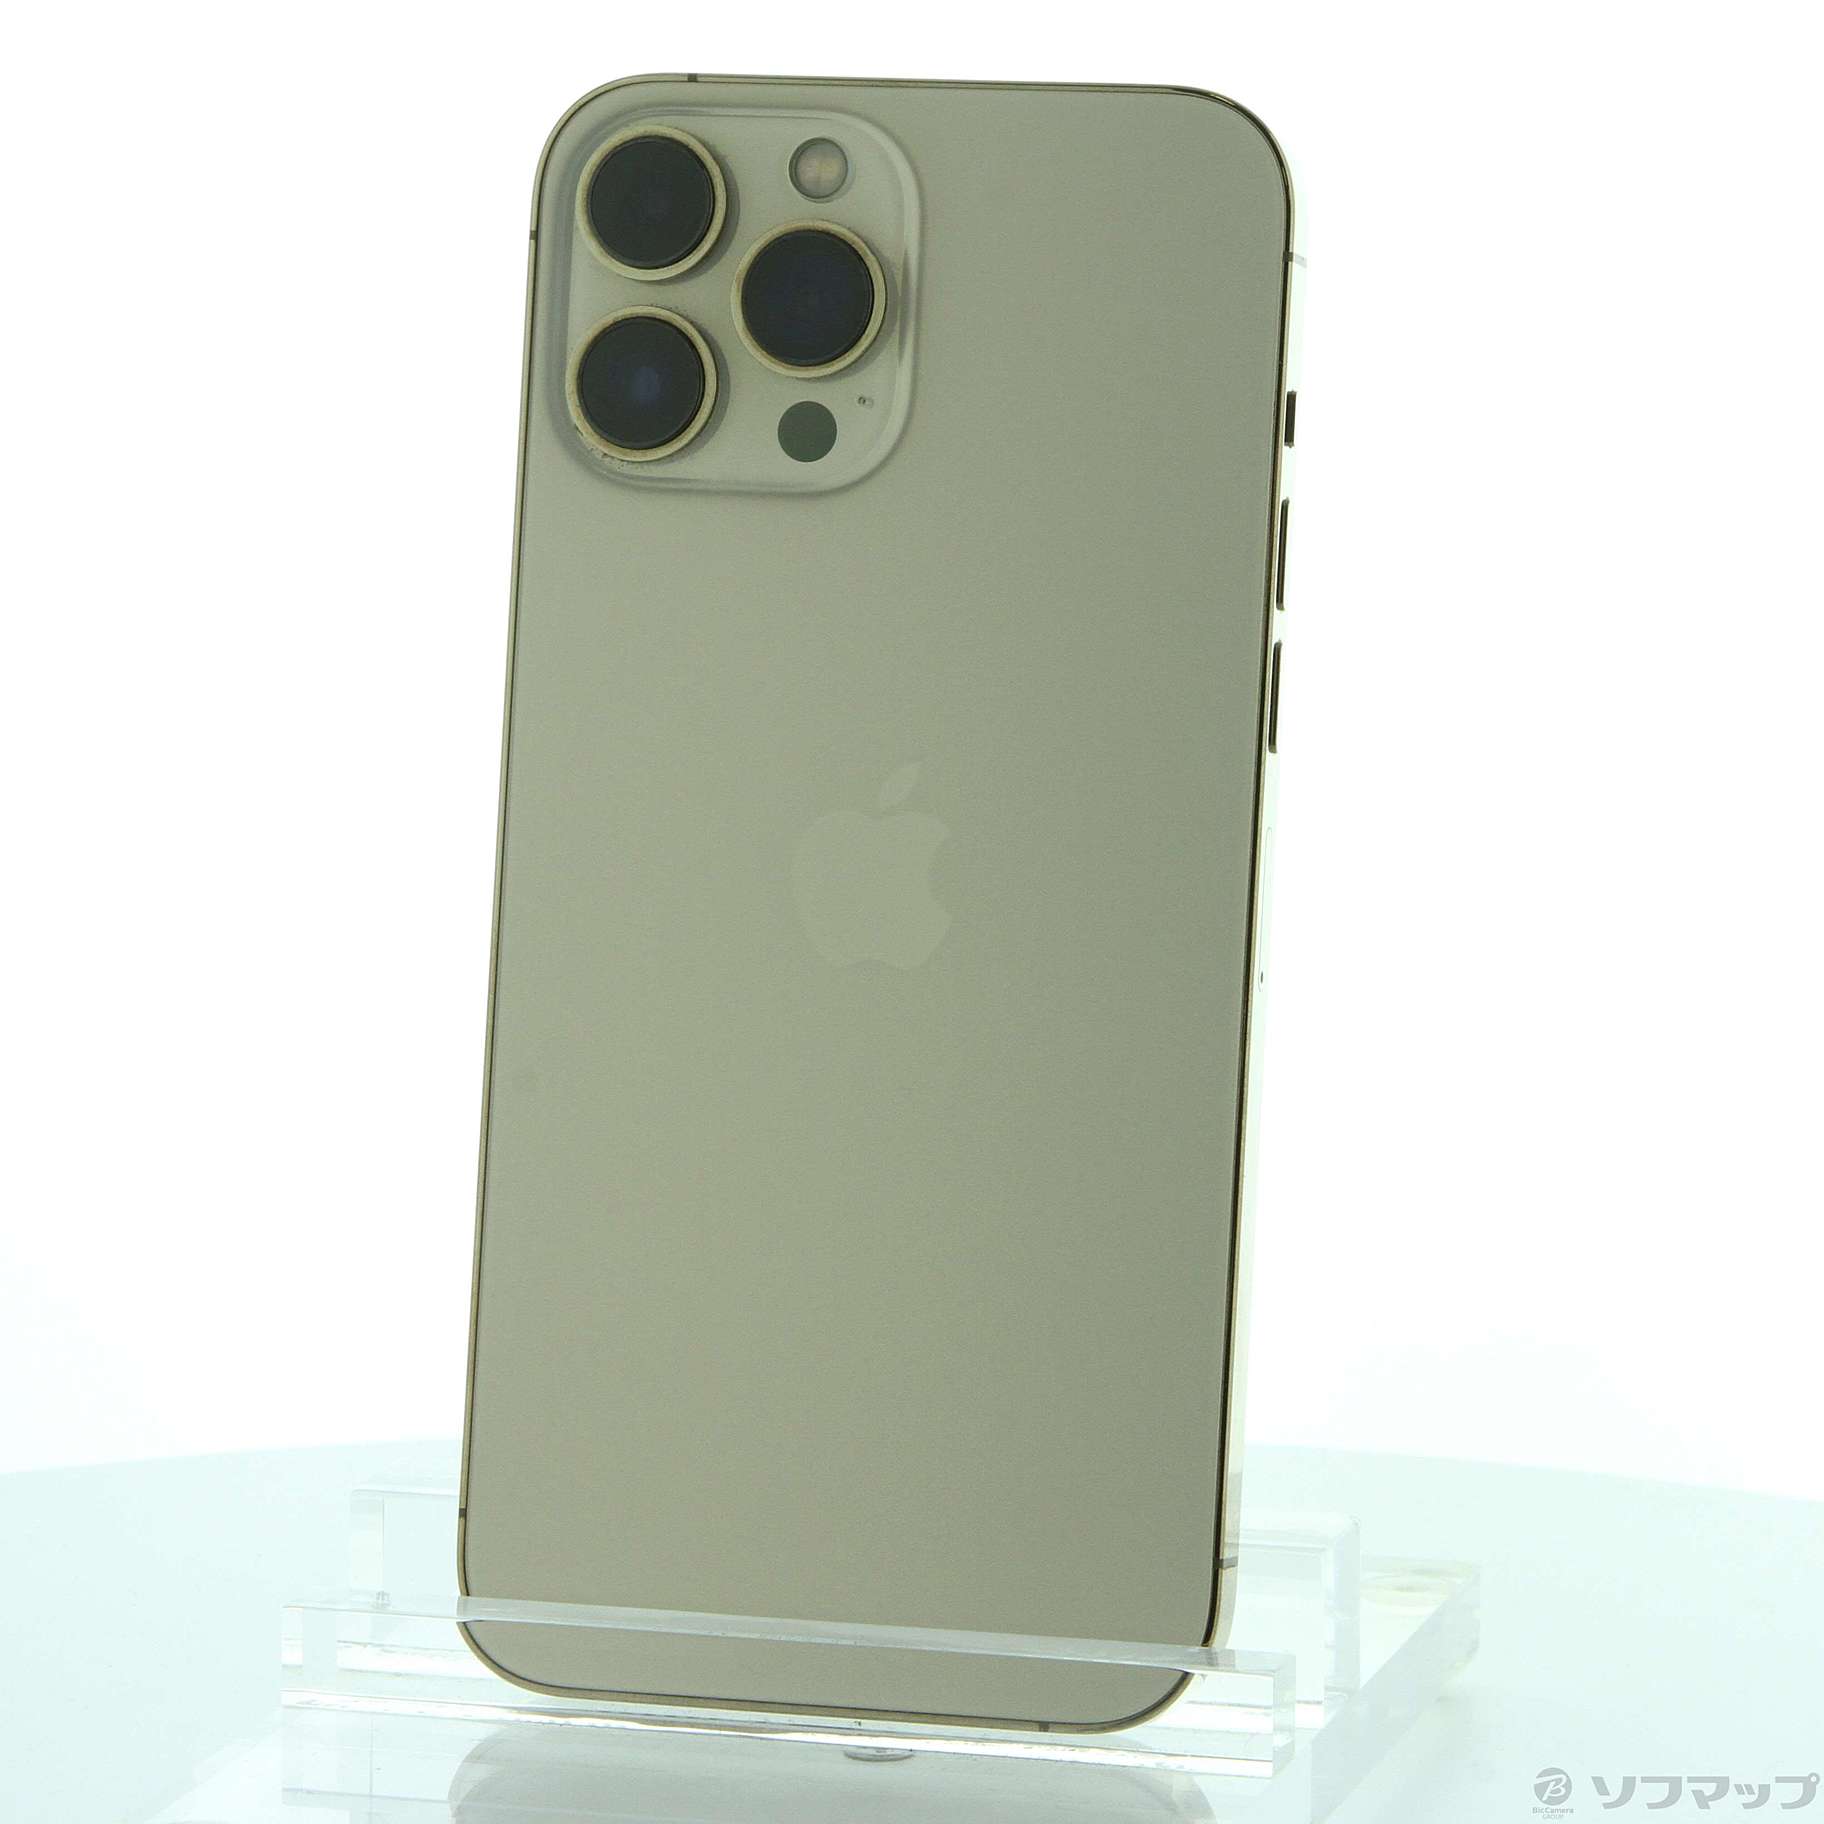 iPhone 13 Pro Max 512GB SIMフリー [ゴールド] 中古(白ロム)価格比較 